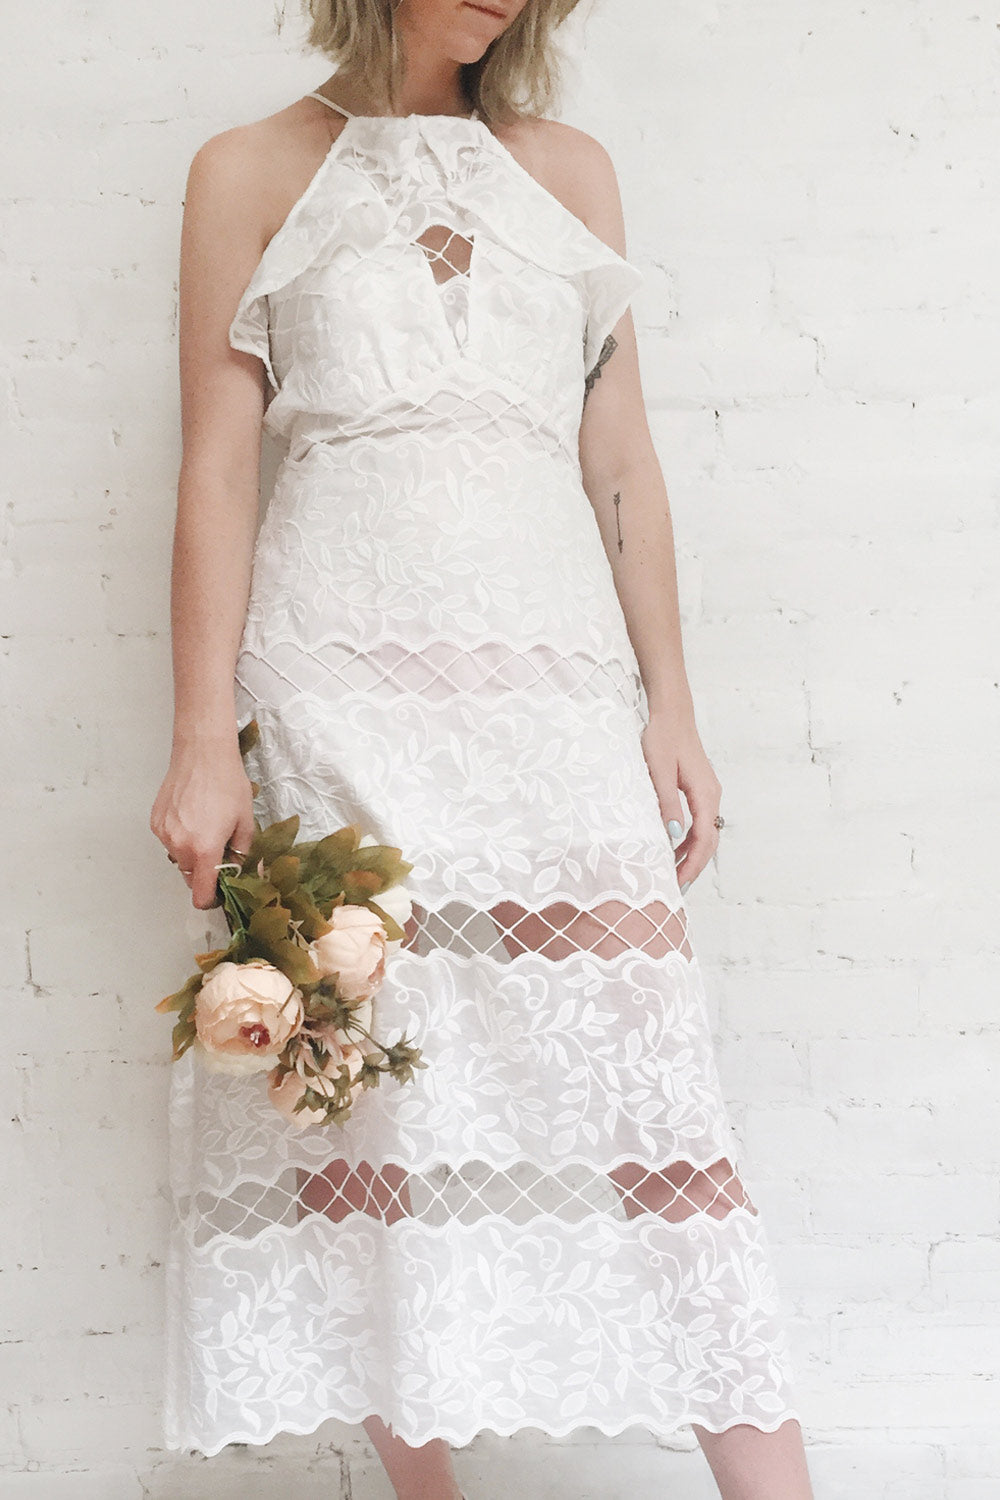 Concri | White Embroidered Ruffled Neckline Bridal Dress